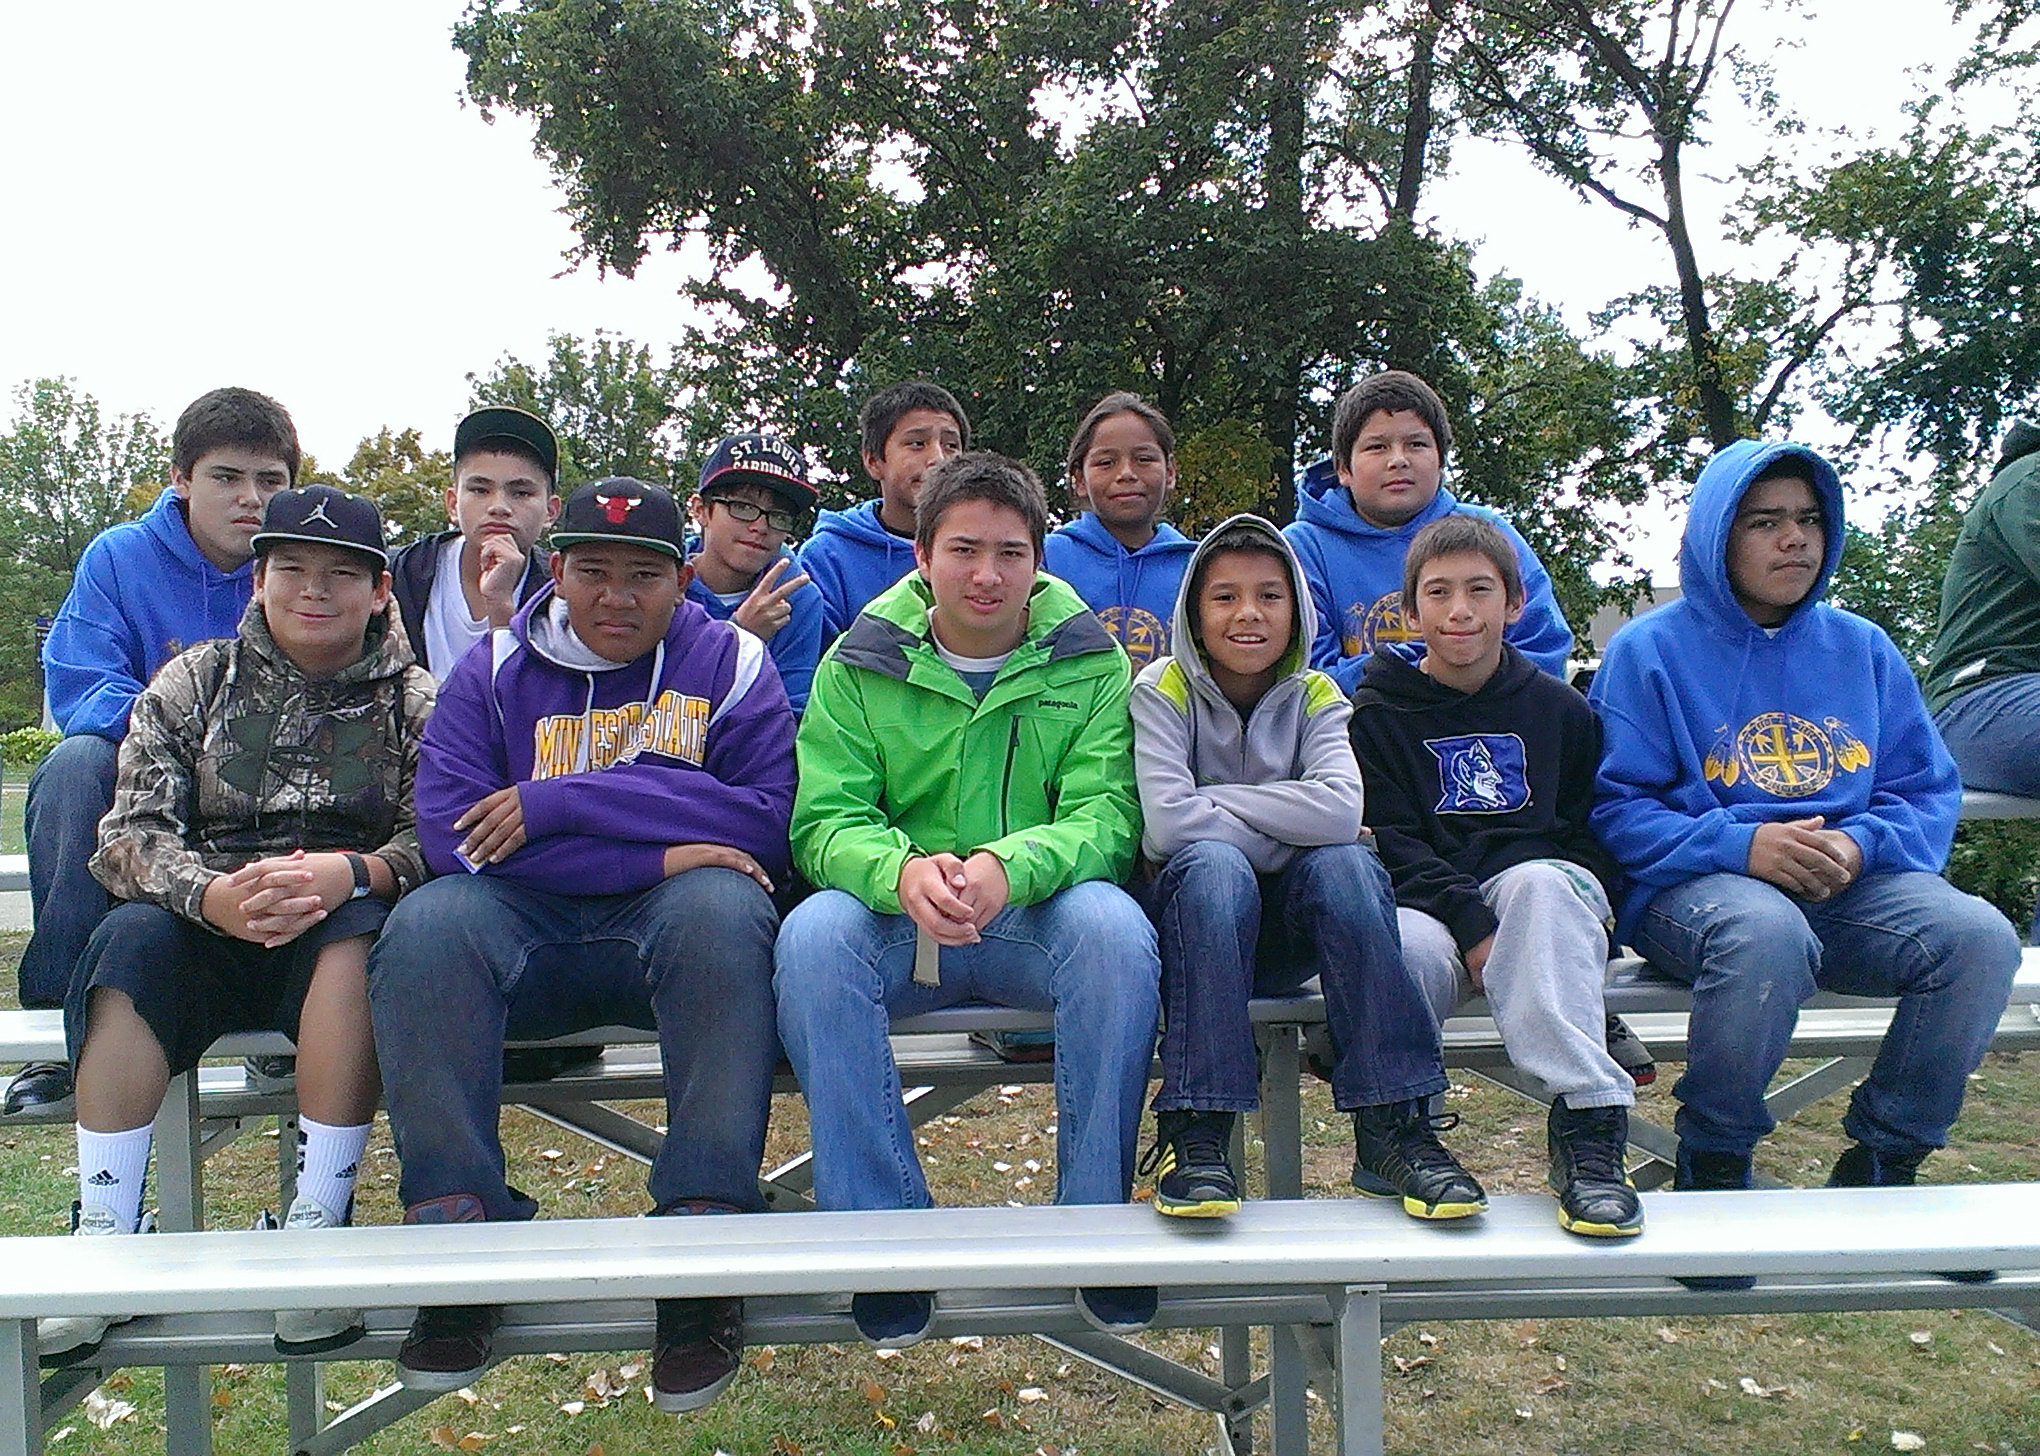 The Lakota boys at a South Dakota State football game.